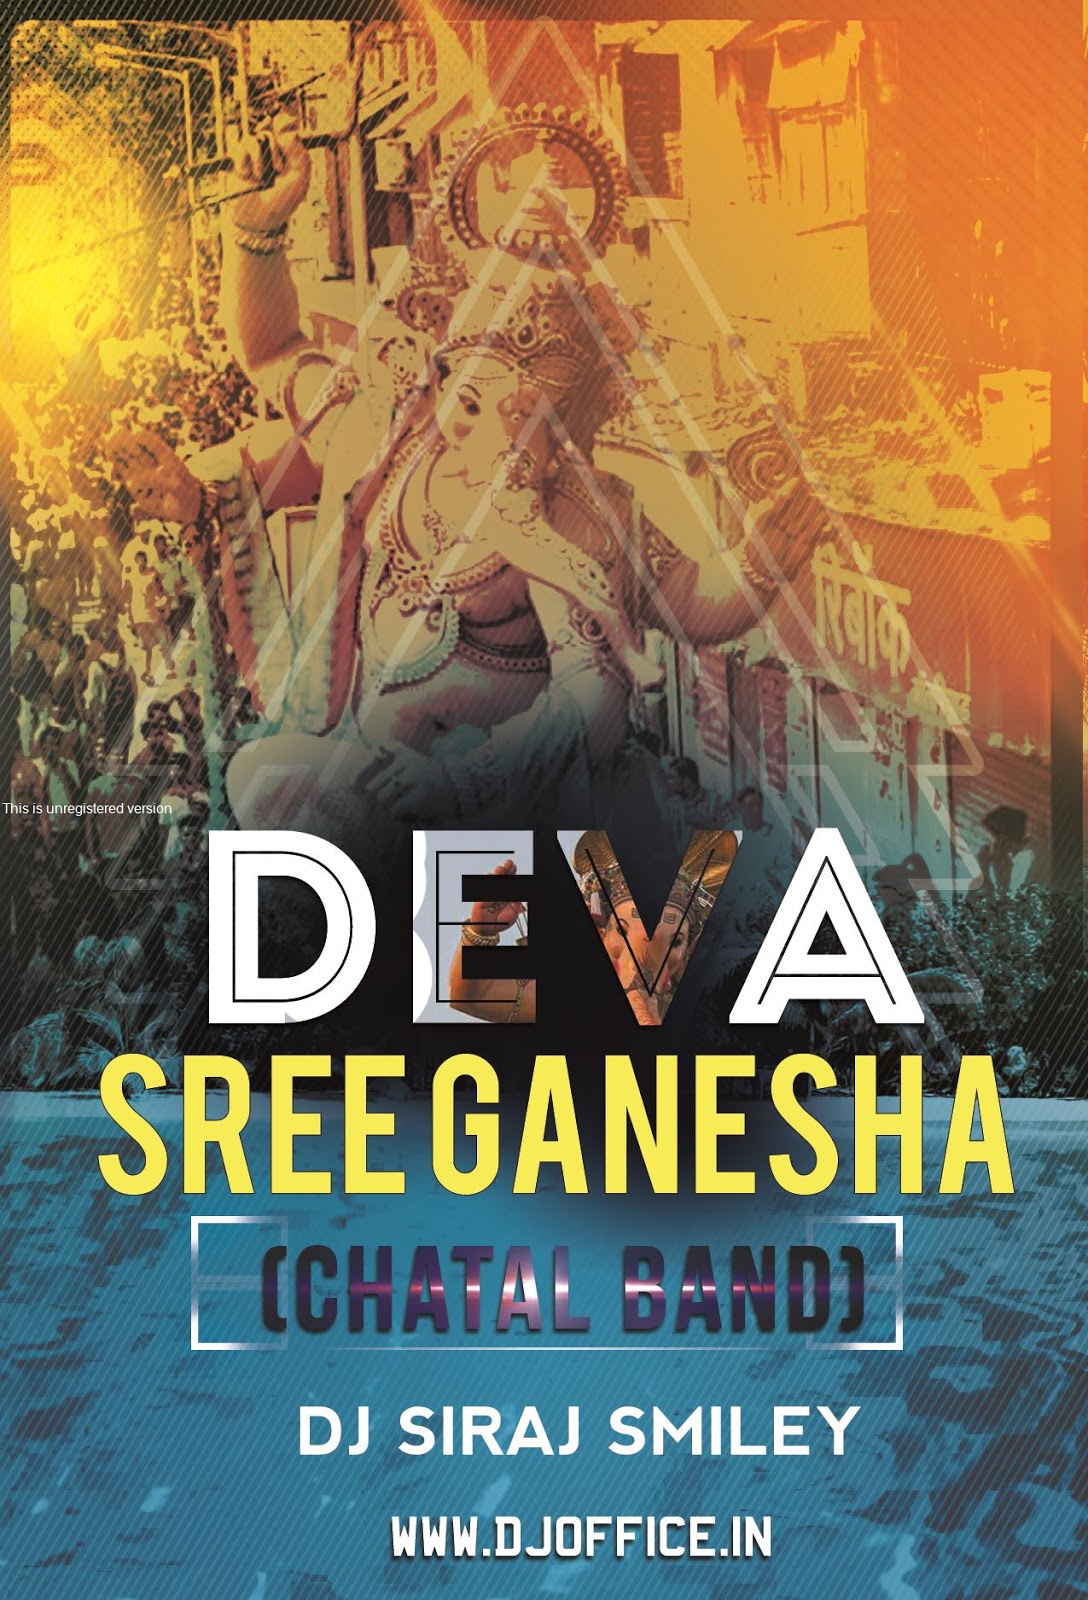 Deva shree ganesha full mp3 song free download